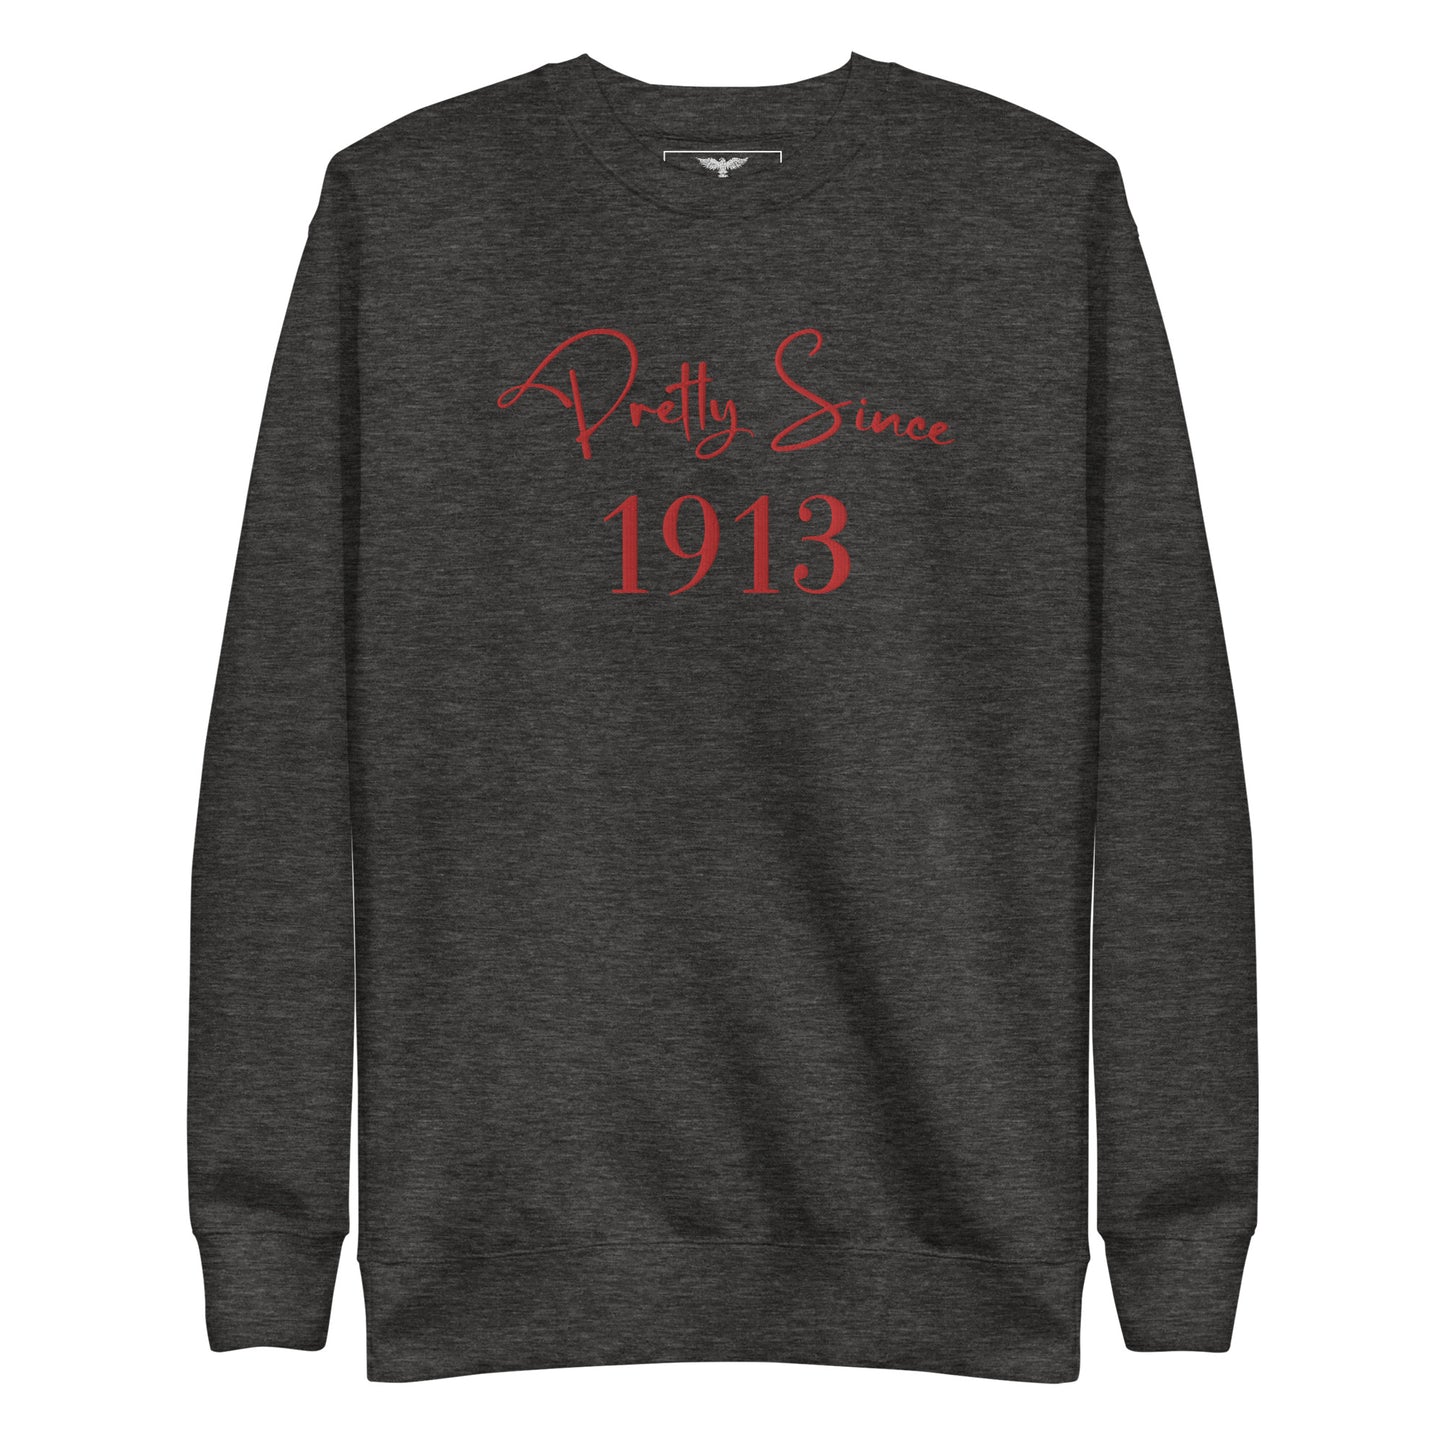 Roberto Raymon | Embroidered "Pretty Since 1913" | Premium Sweatshirt